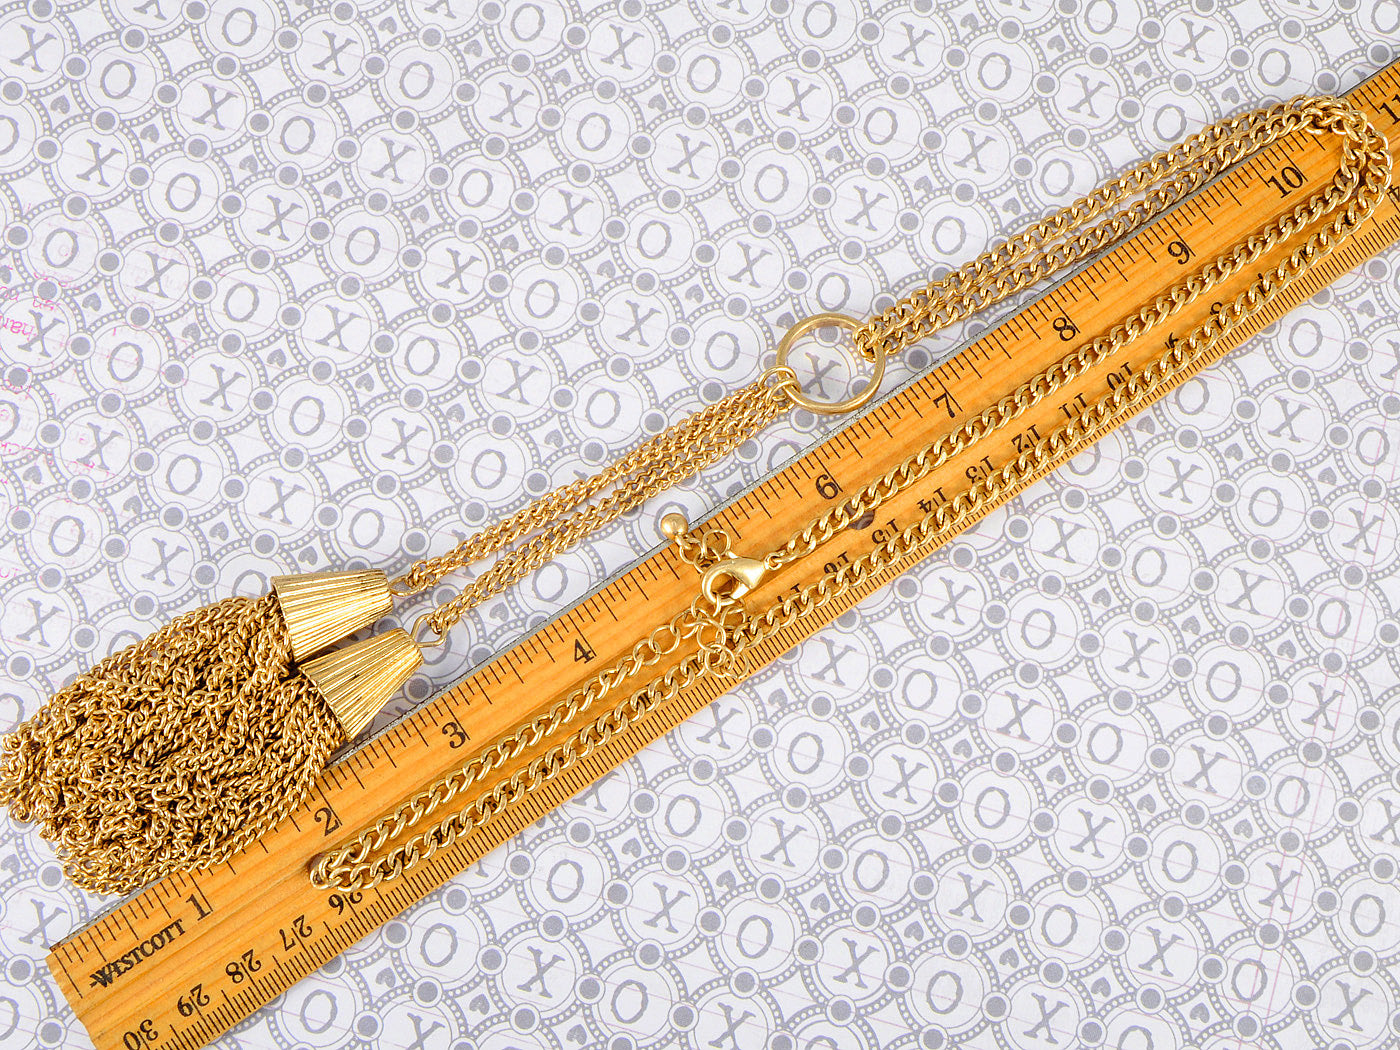 Boho Vintage Twin Tassel Drop Dangle Ring Chain Pendant Necklace